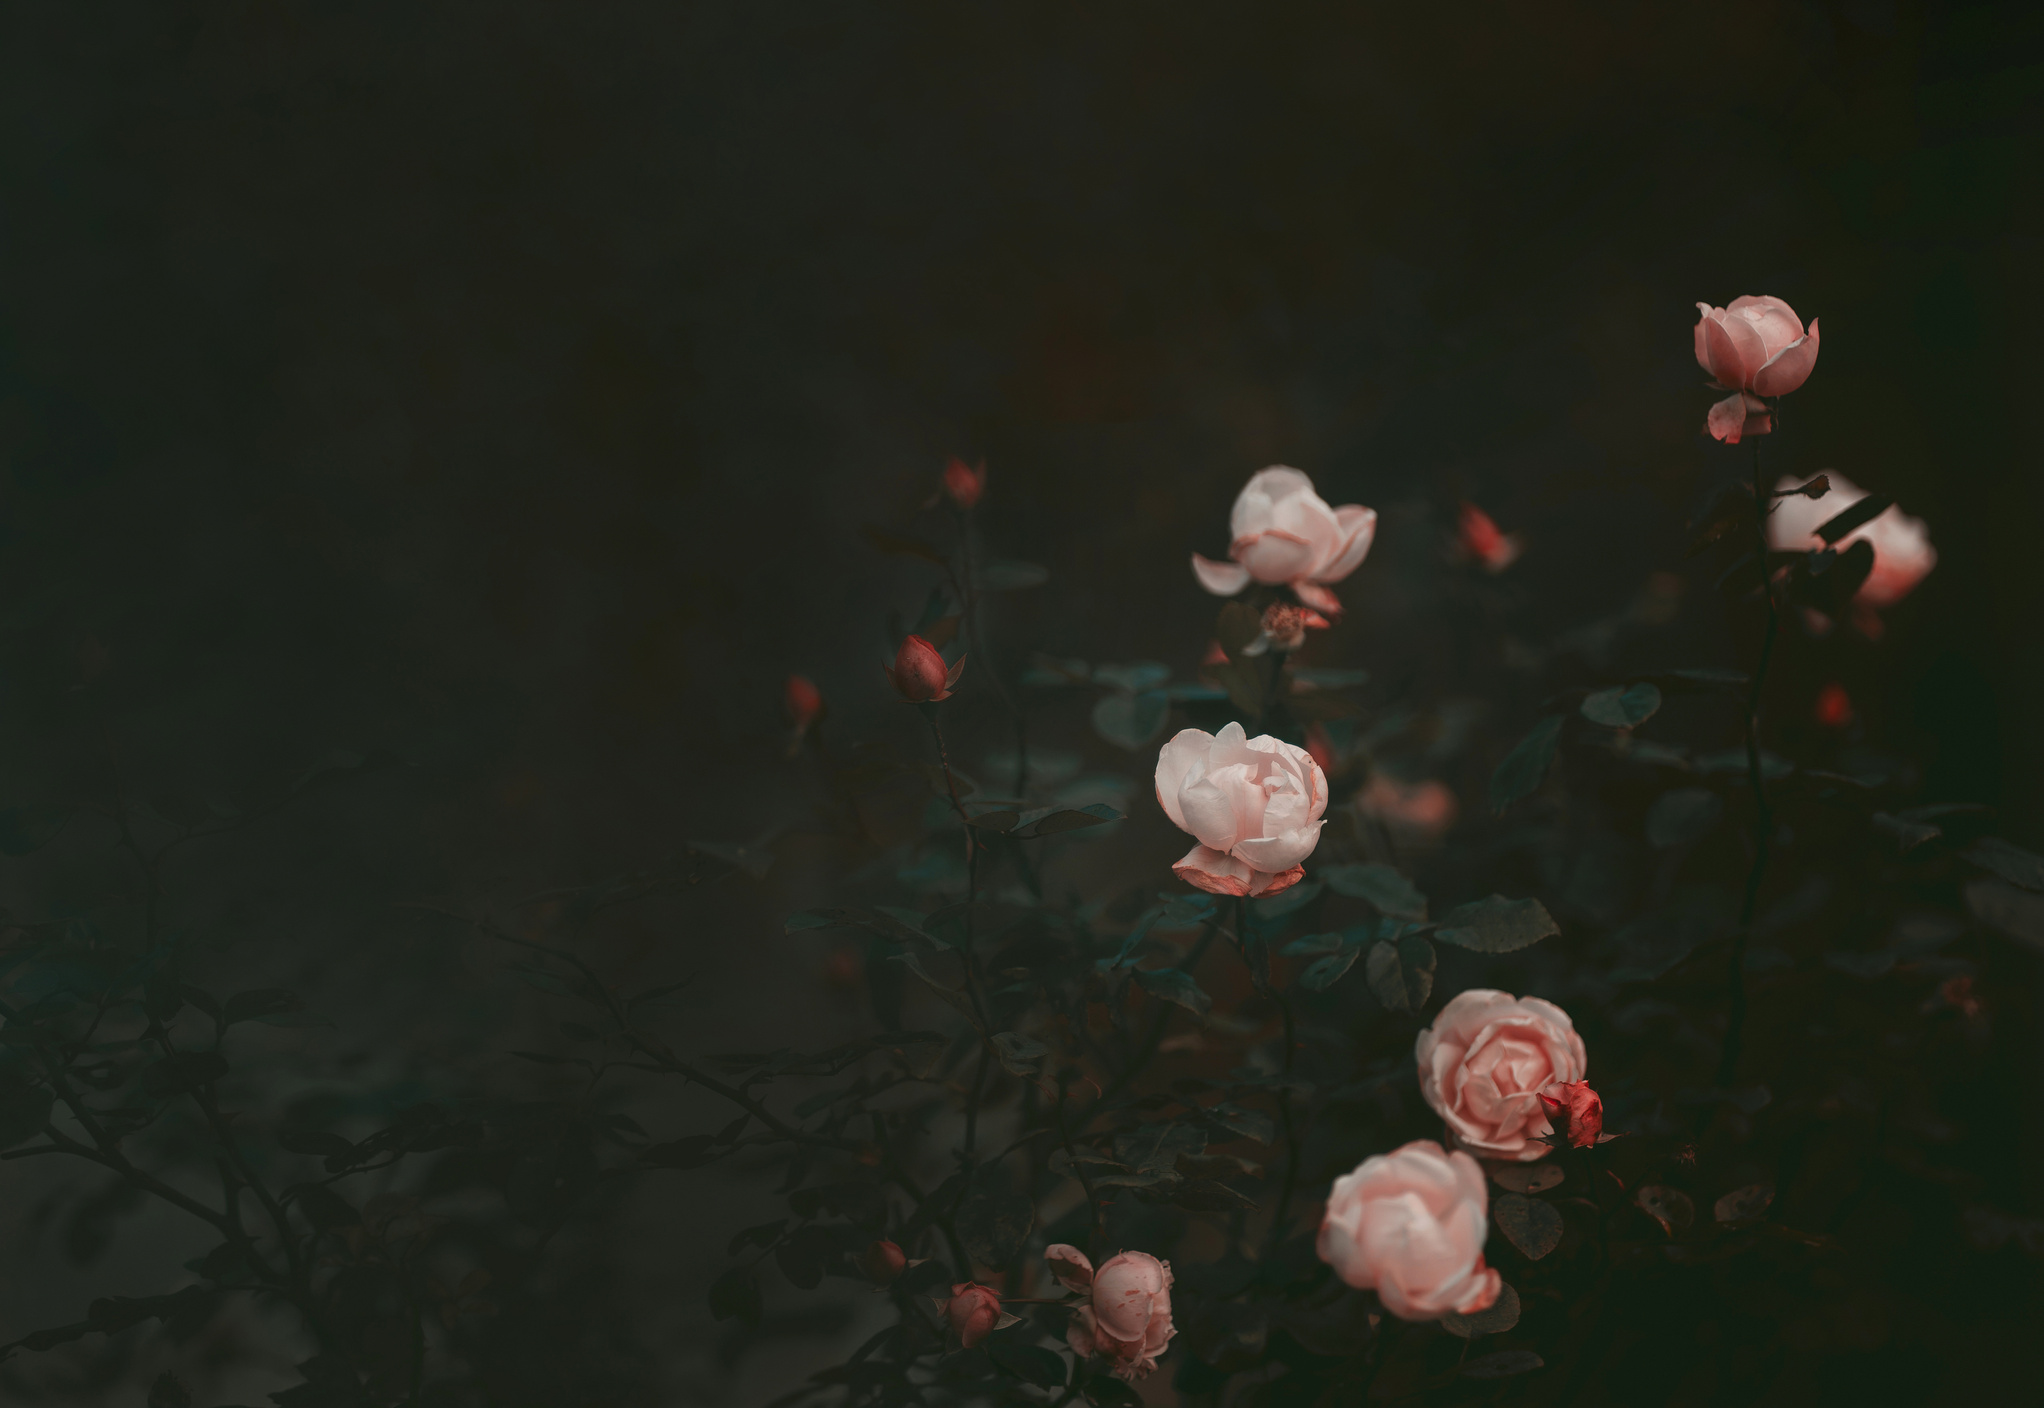 Moody roses, dark aesthetic background